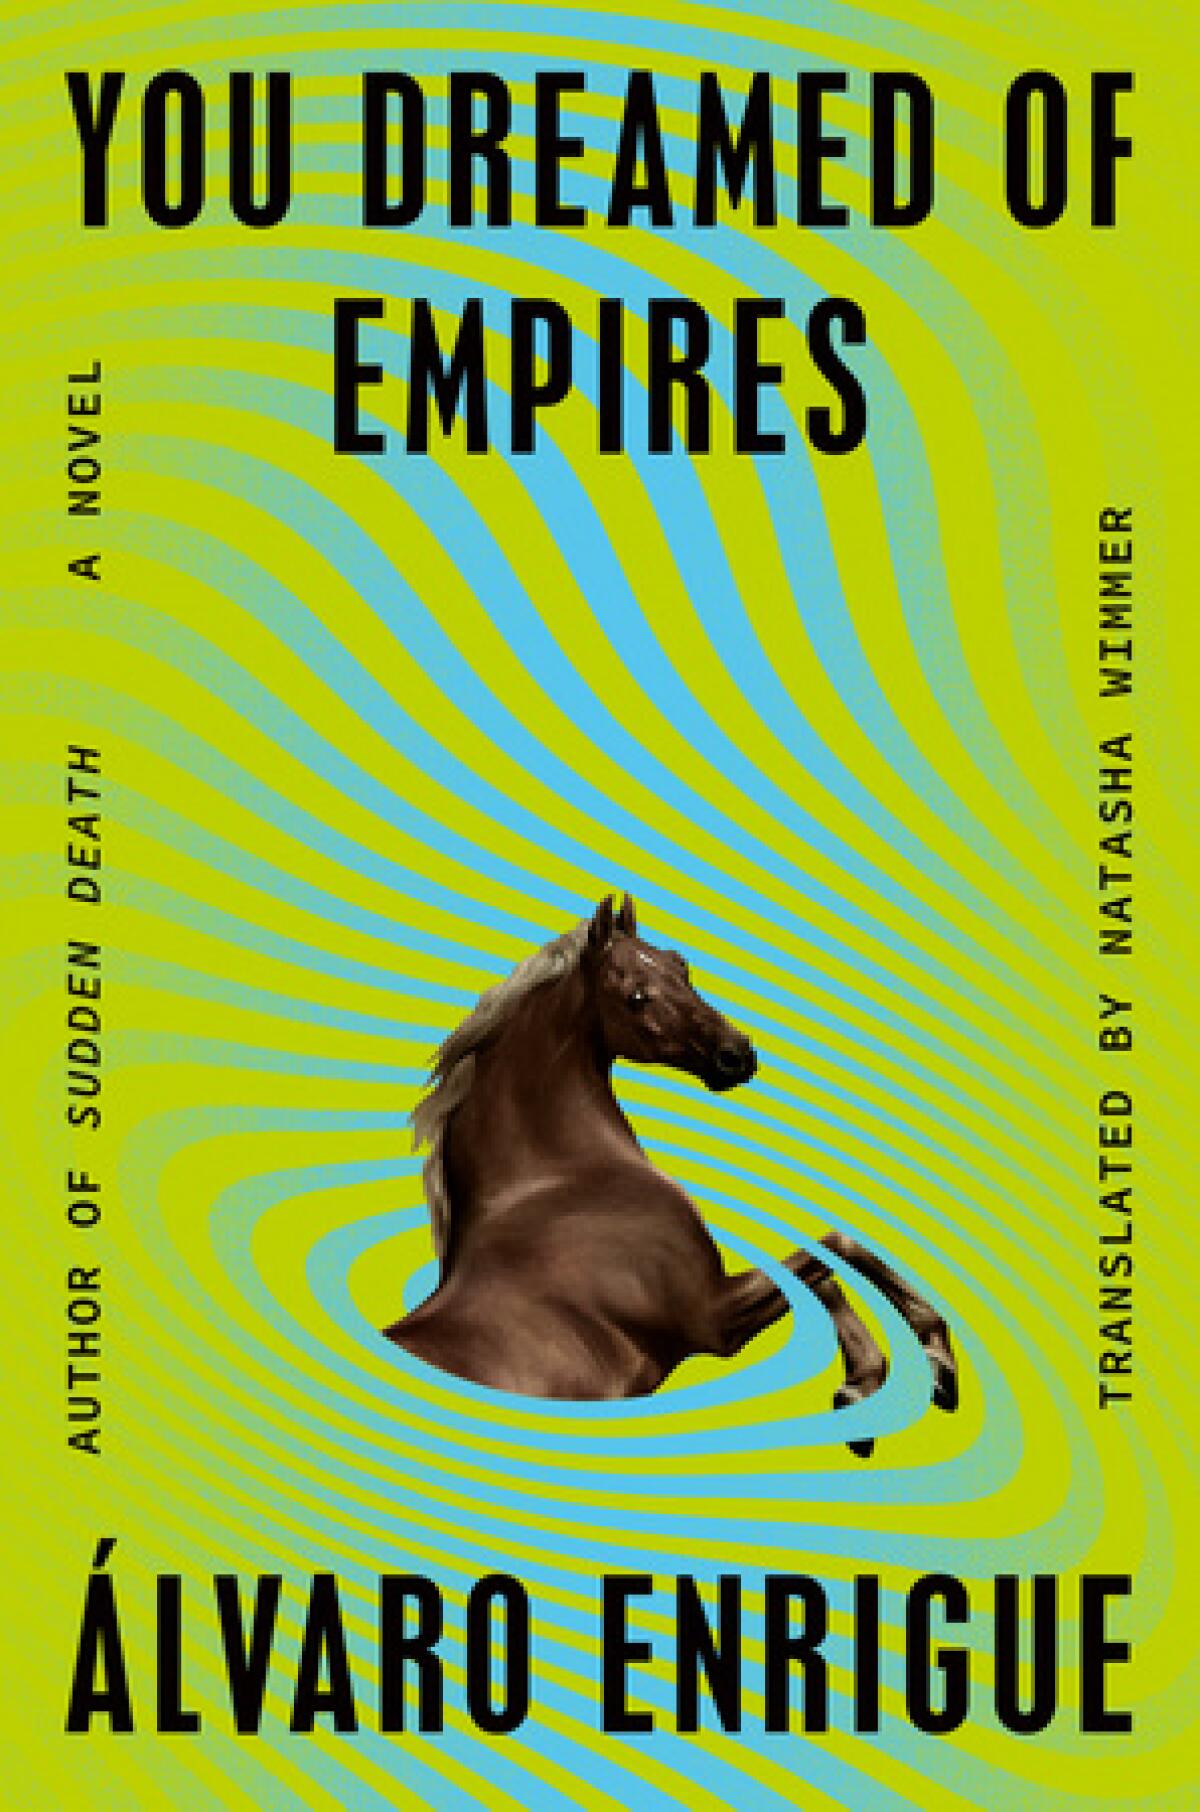 "You Dreamed of Empires," by lvaro Enrigue